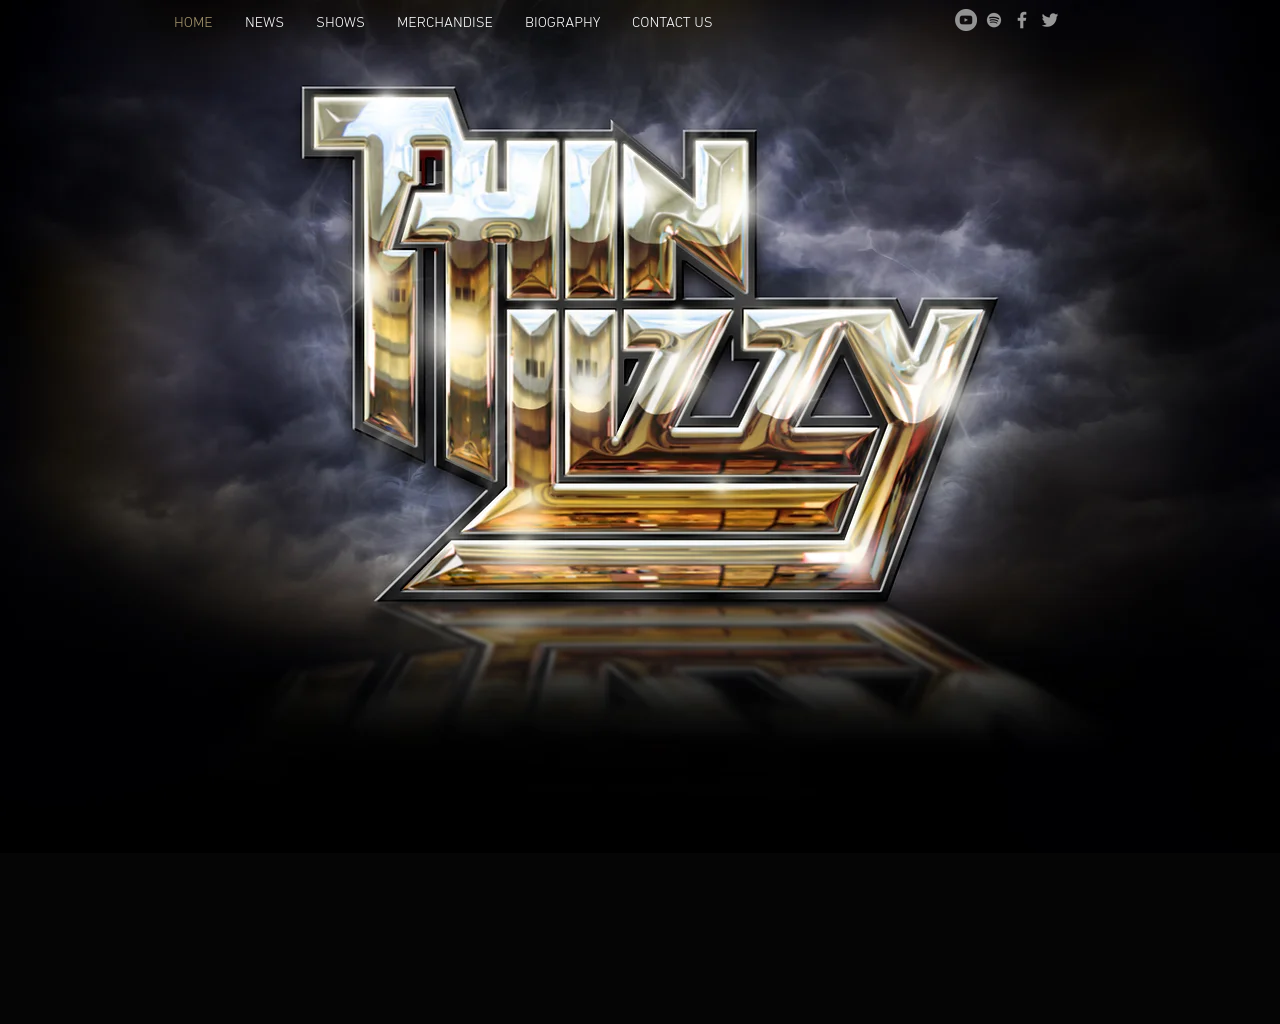 thinlizzyband.com